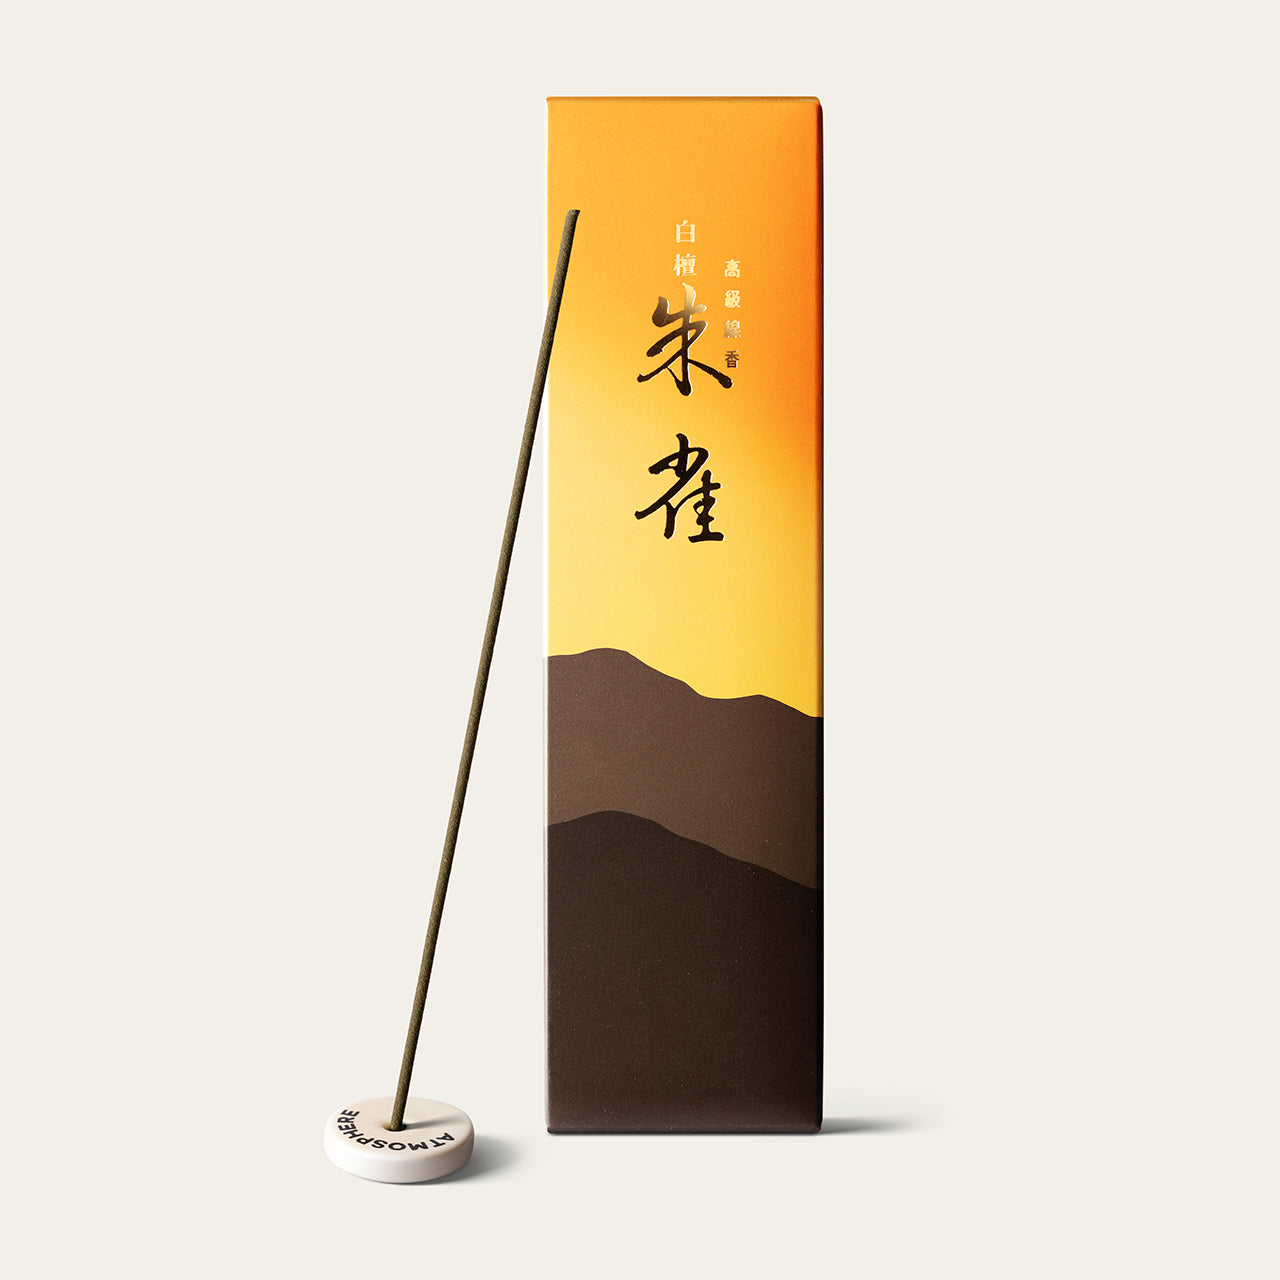 Gyokushodo Byakudan Suzaku Vermilion Sandalwood Japanese incense sticks (25 sticks) with Atmosphere ceramic incense holder